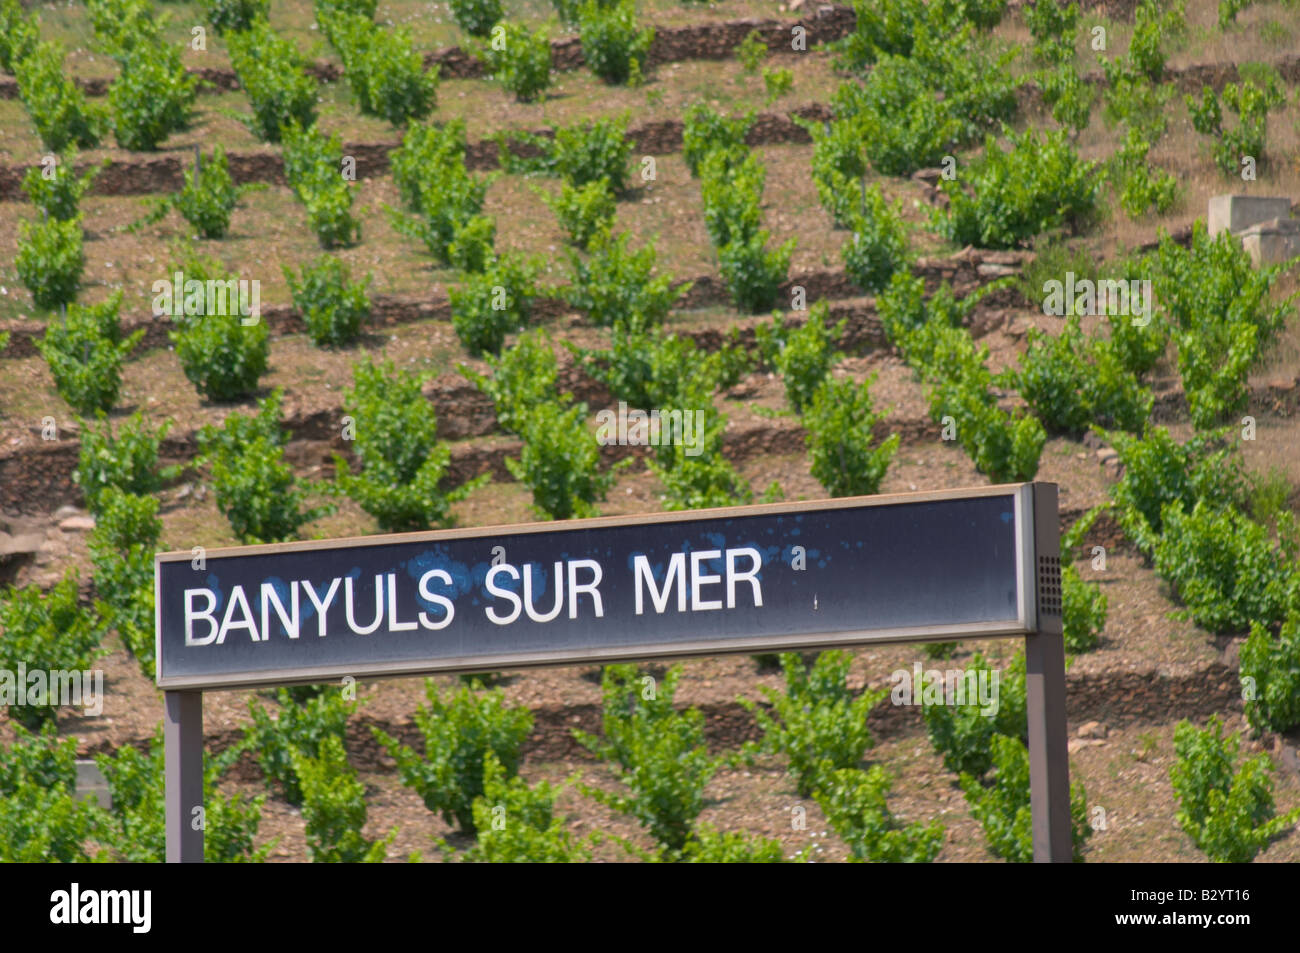 Becher beschnitten Reben im Weinberg. Am Bahnhof. Banyuls Sur Mer, Roussillon, Frankreich Stockfoto